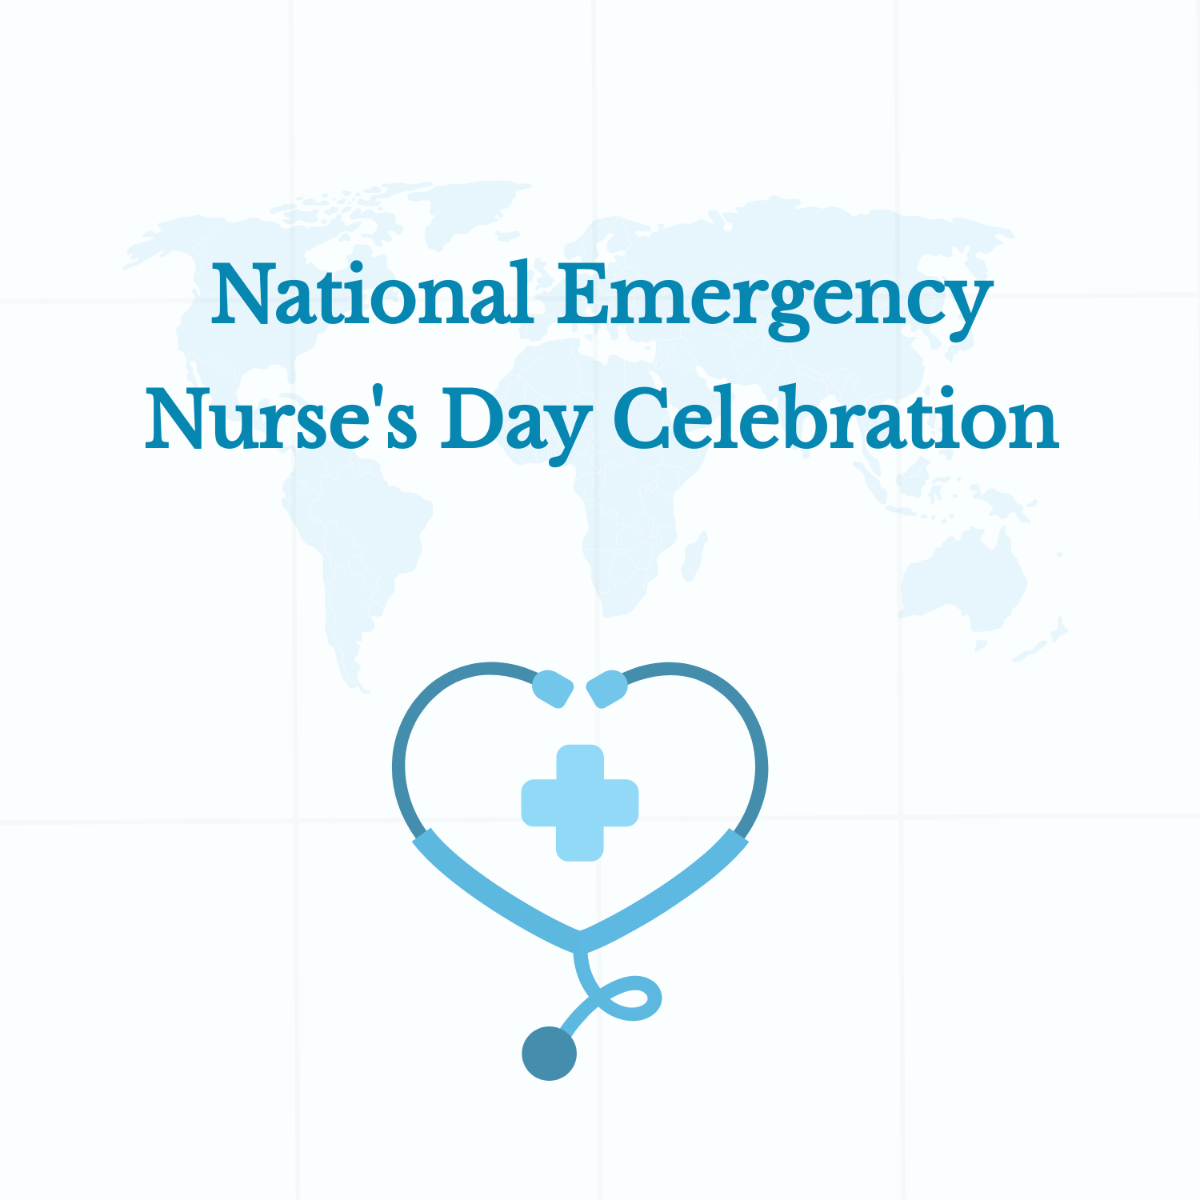 Free National Emergency Nurse's Day Celebration Vector Template